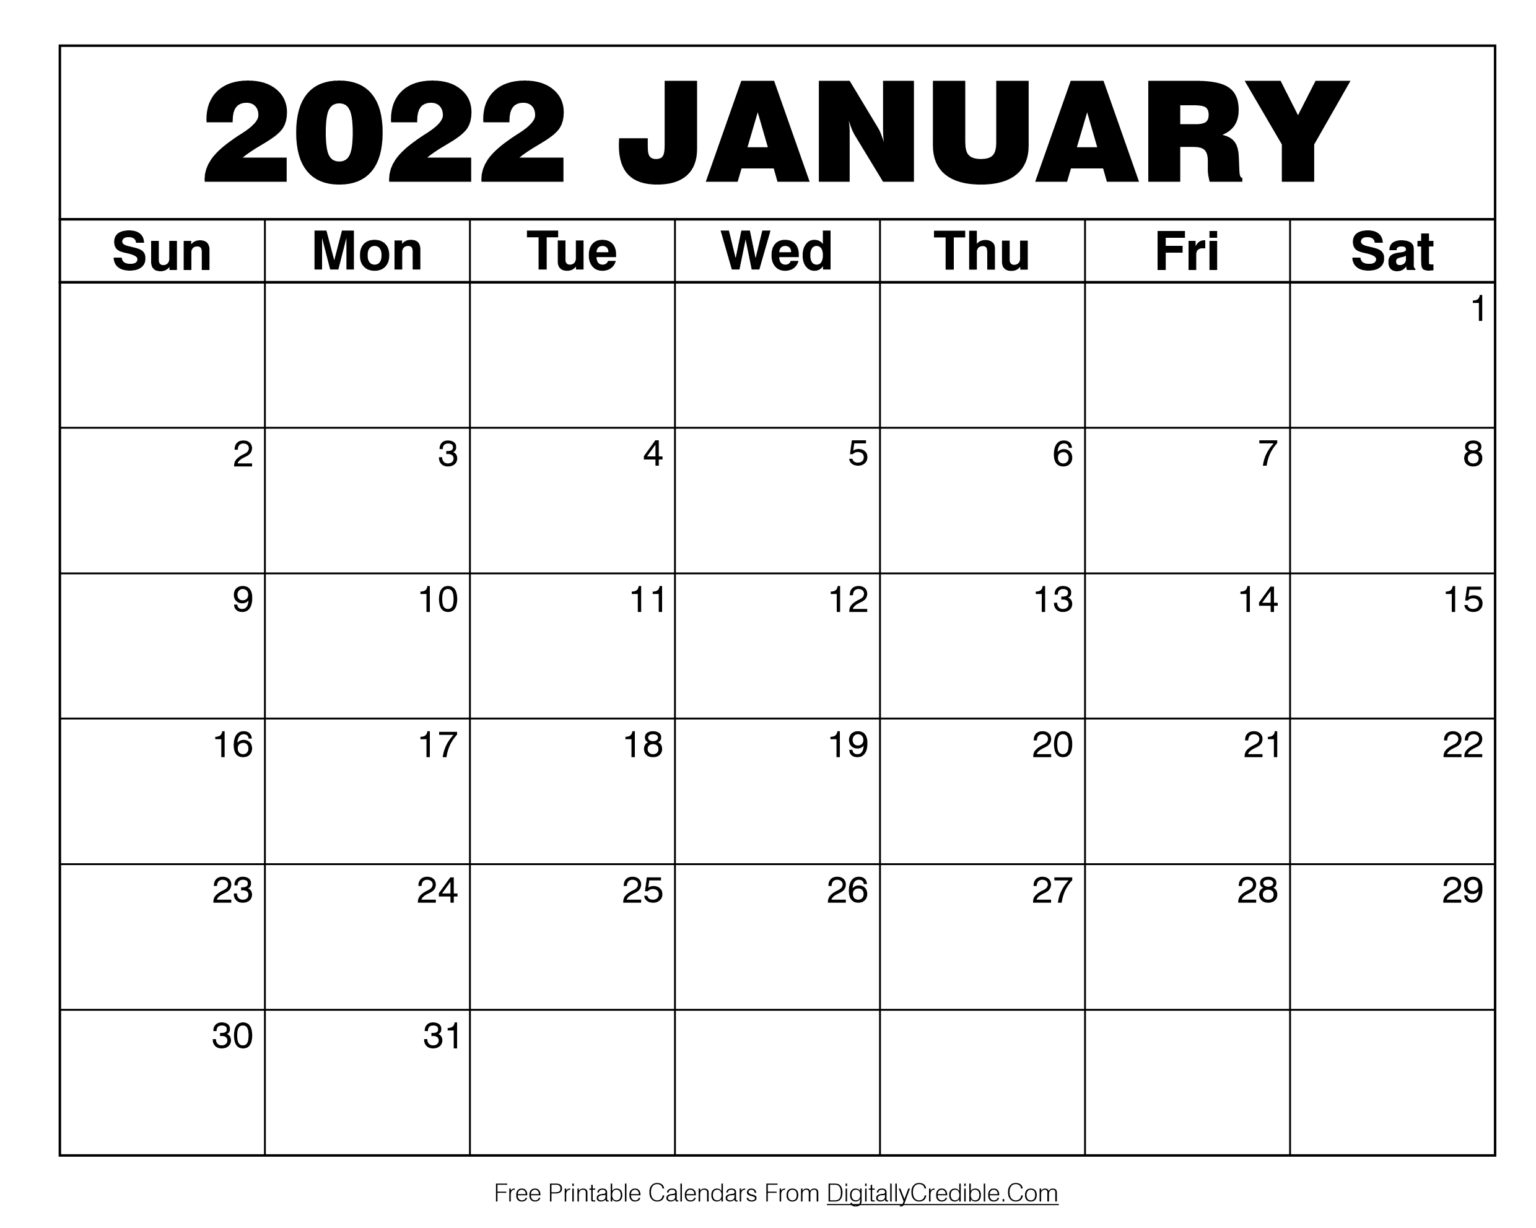 January 2022 Calendar Printable - Desk &amp; Wall